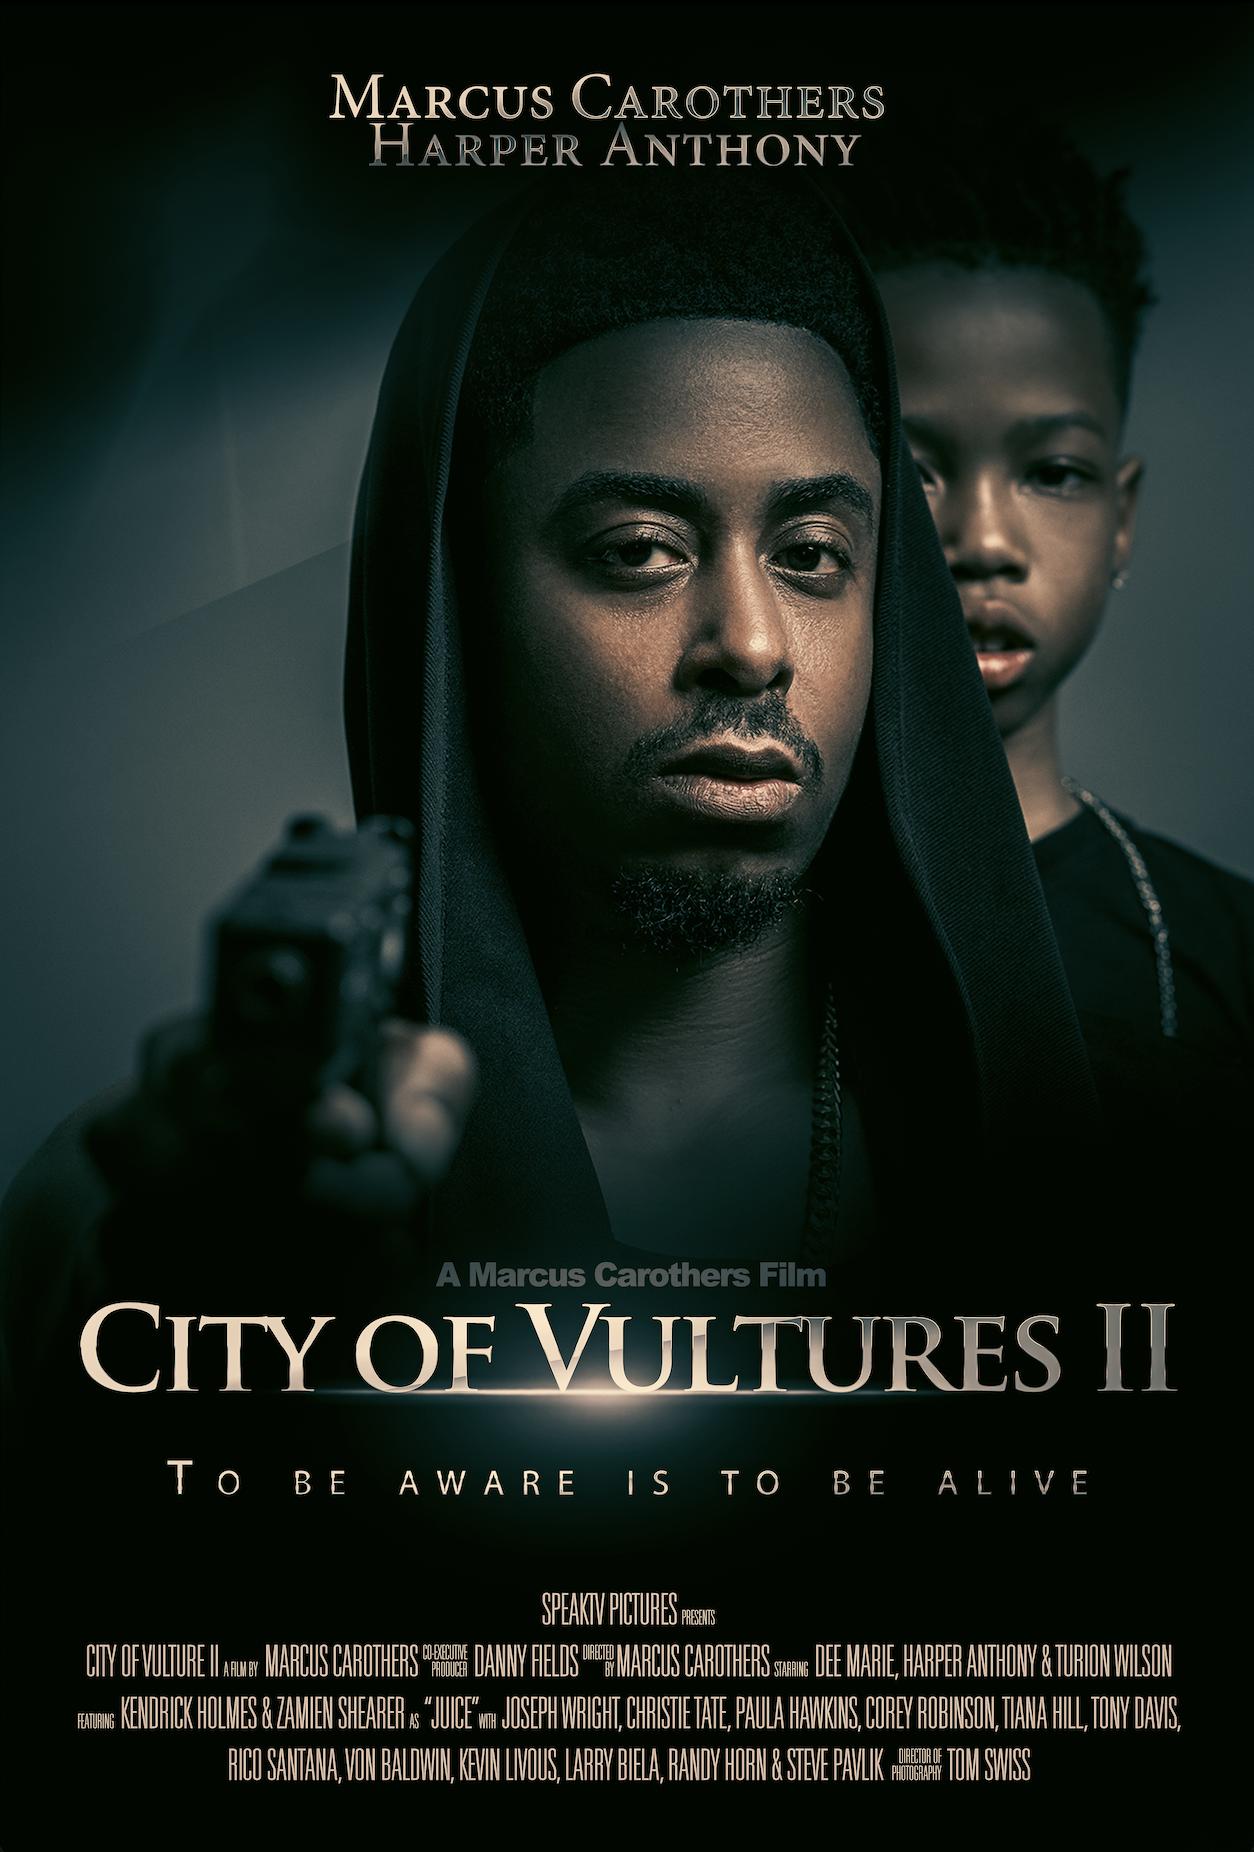 Nonton film City of Vultures 2 layarkaca21 indoxx1 ganool online streaming terbaru